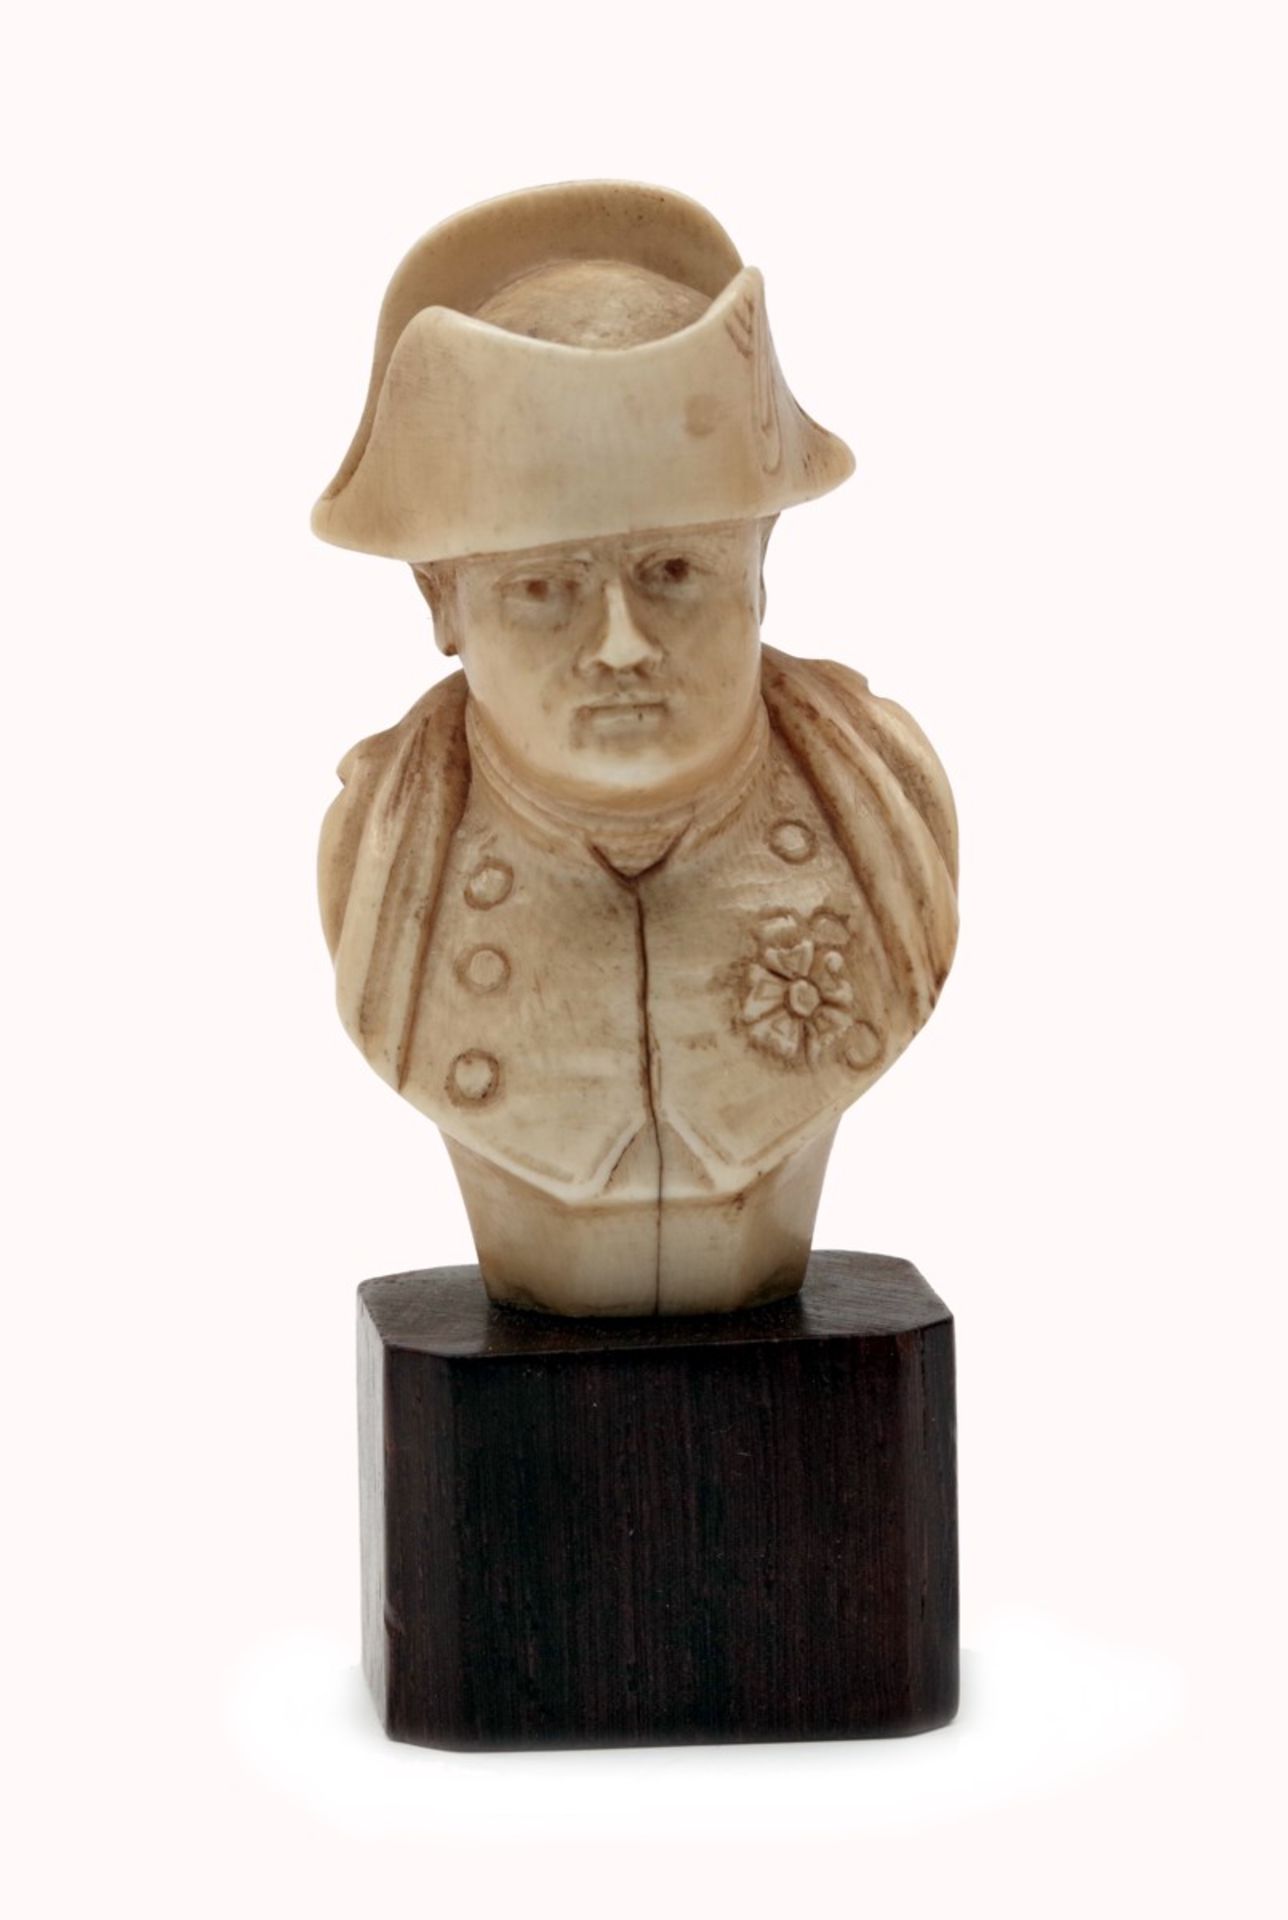 A Small Ivory Bust of Napoleon Bonaparte